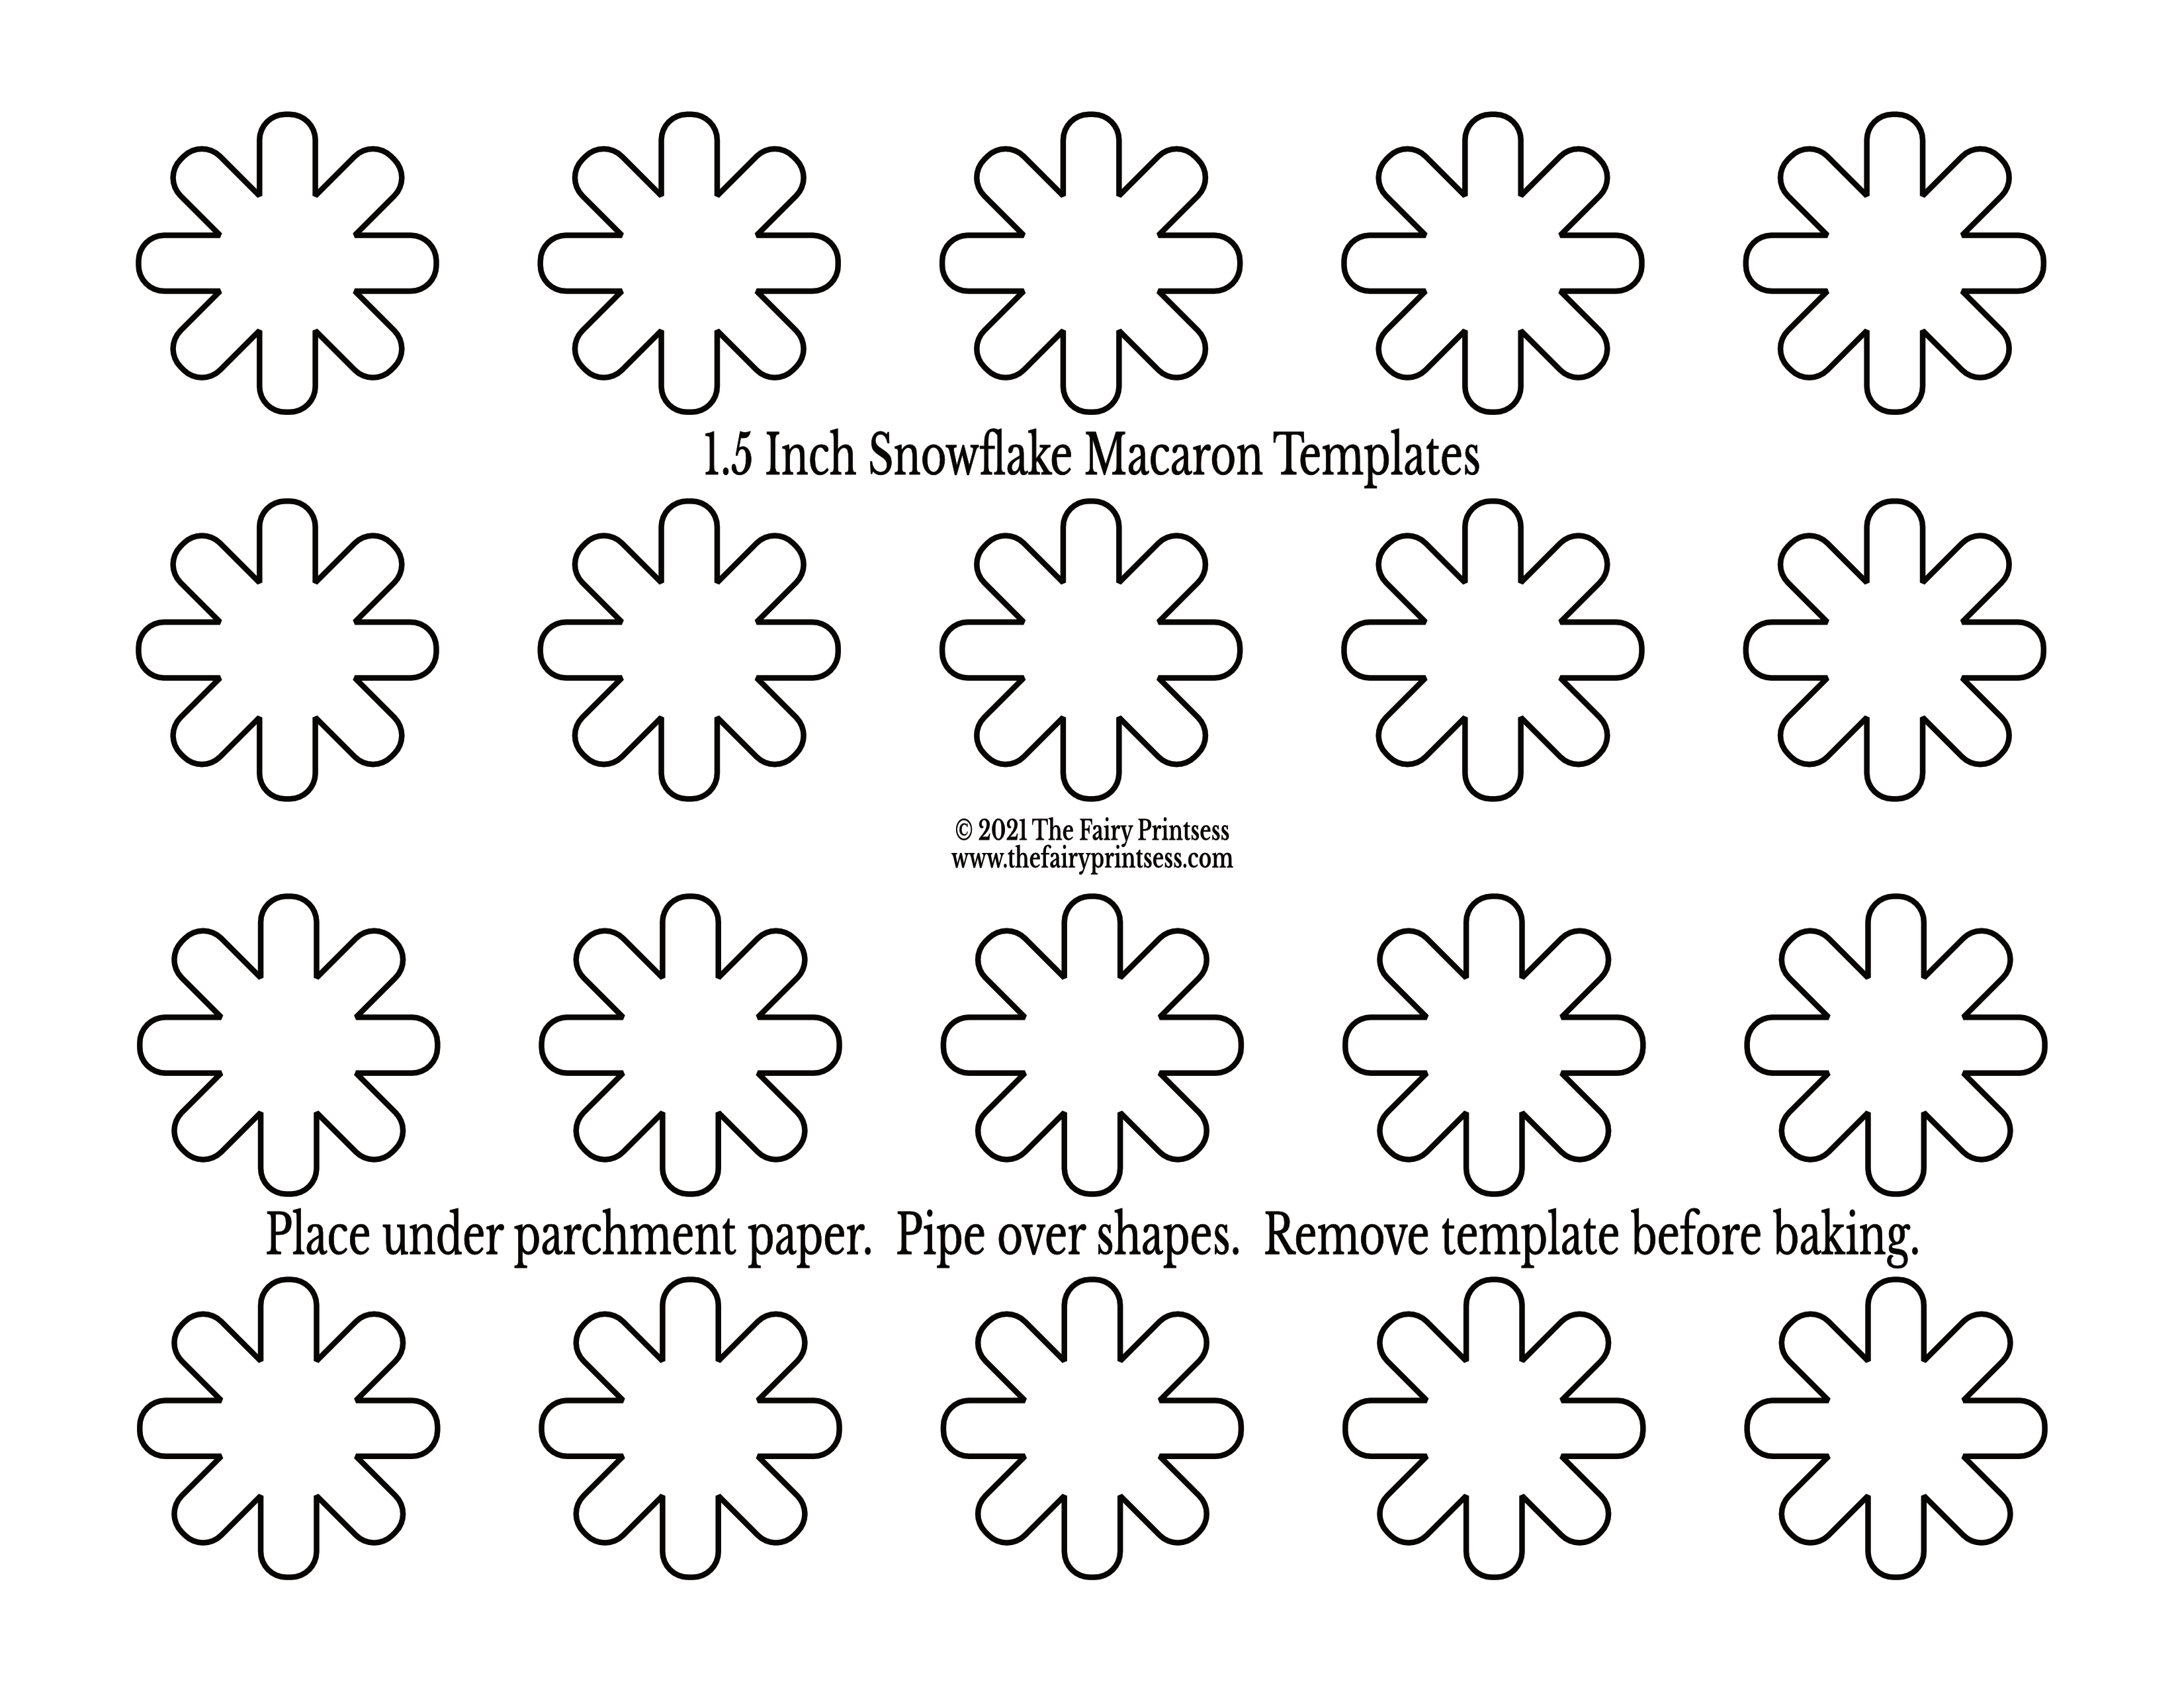 1.5 inch snowflake macaron template free printable